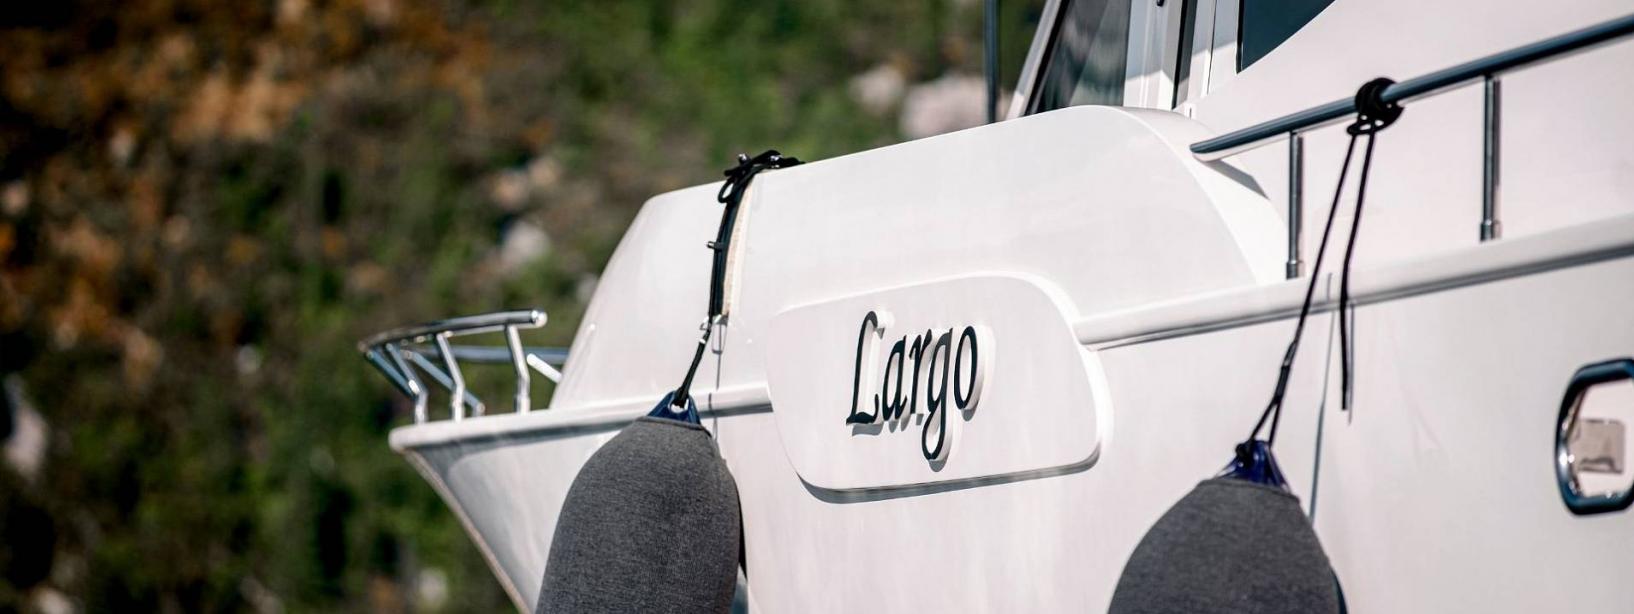 yacht Largo